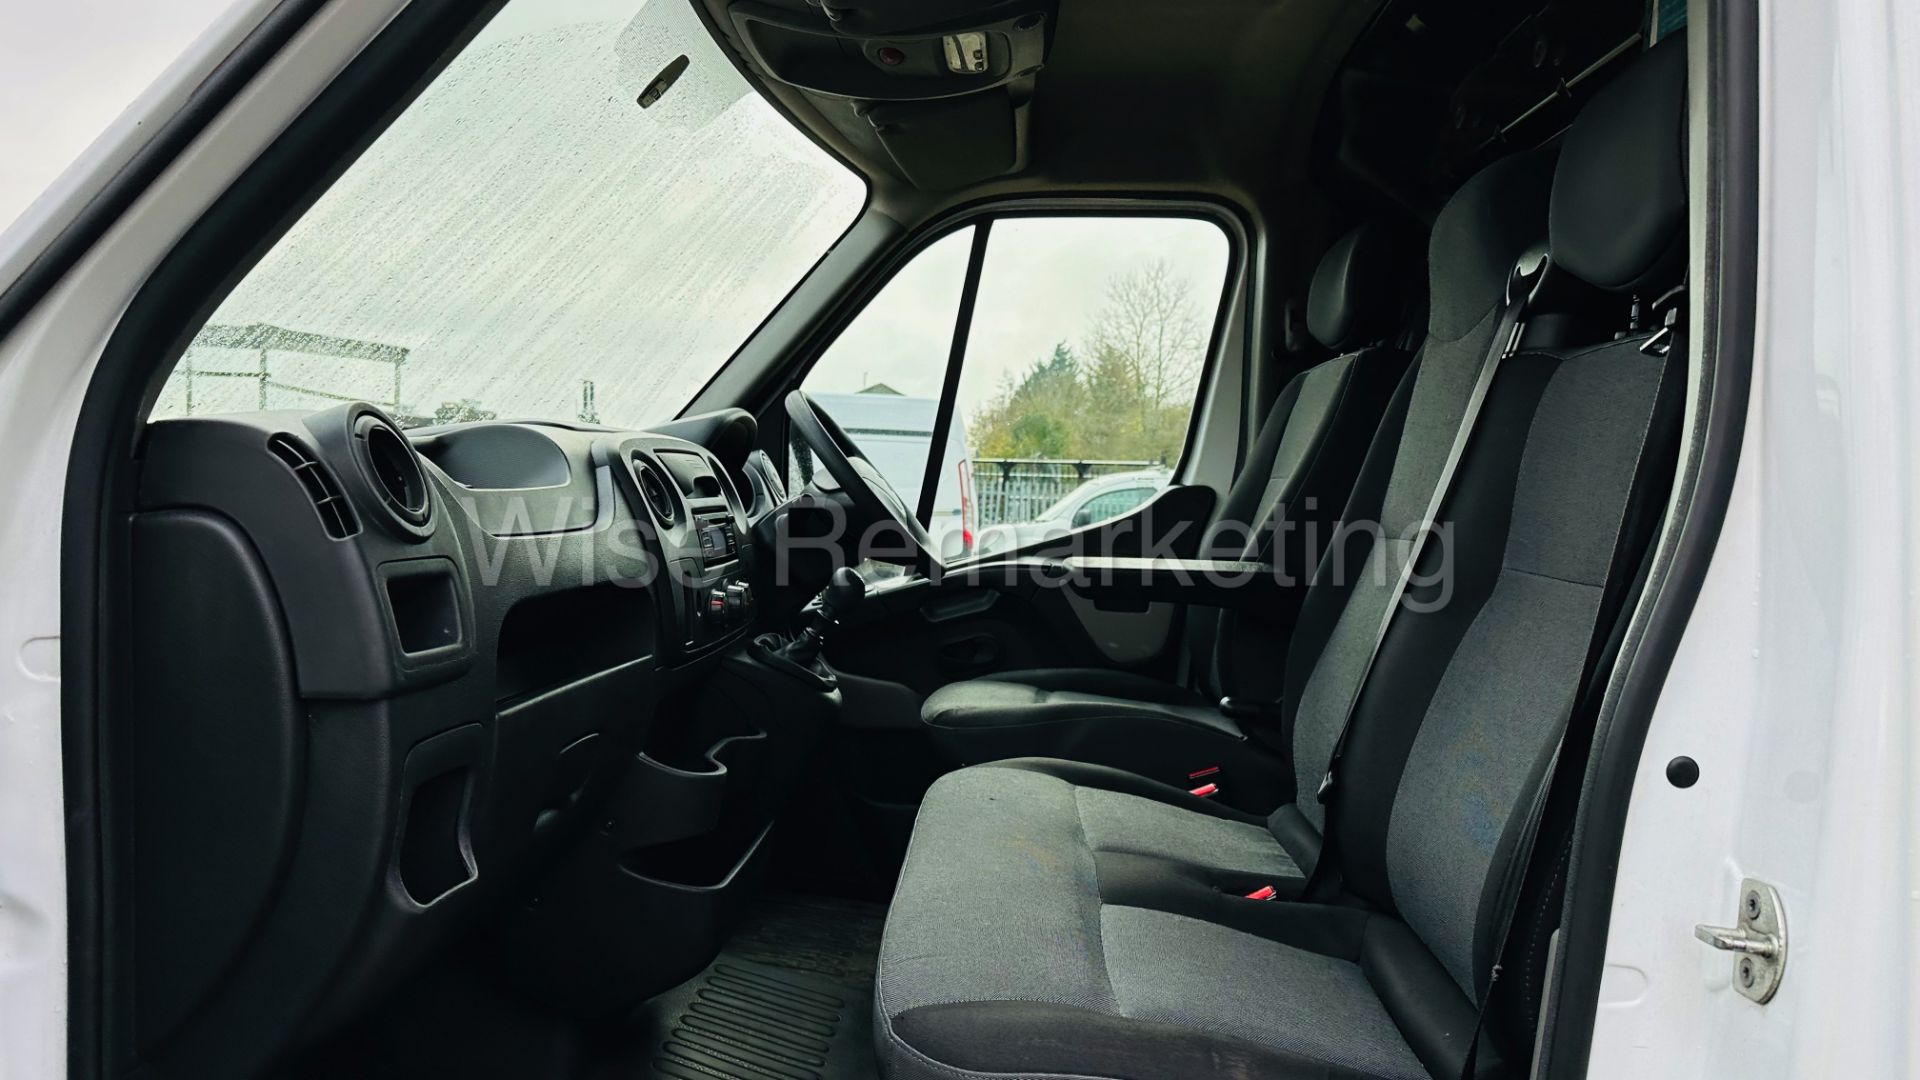 Renault Master 2.3 Dci *LWB Low Loader / Luton Box* (2019) Euro 6 / U-LEZ Compliant (3500 kg) *A/C* - Image 20 of 34